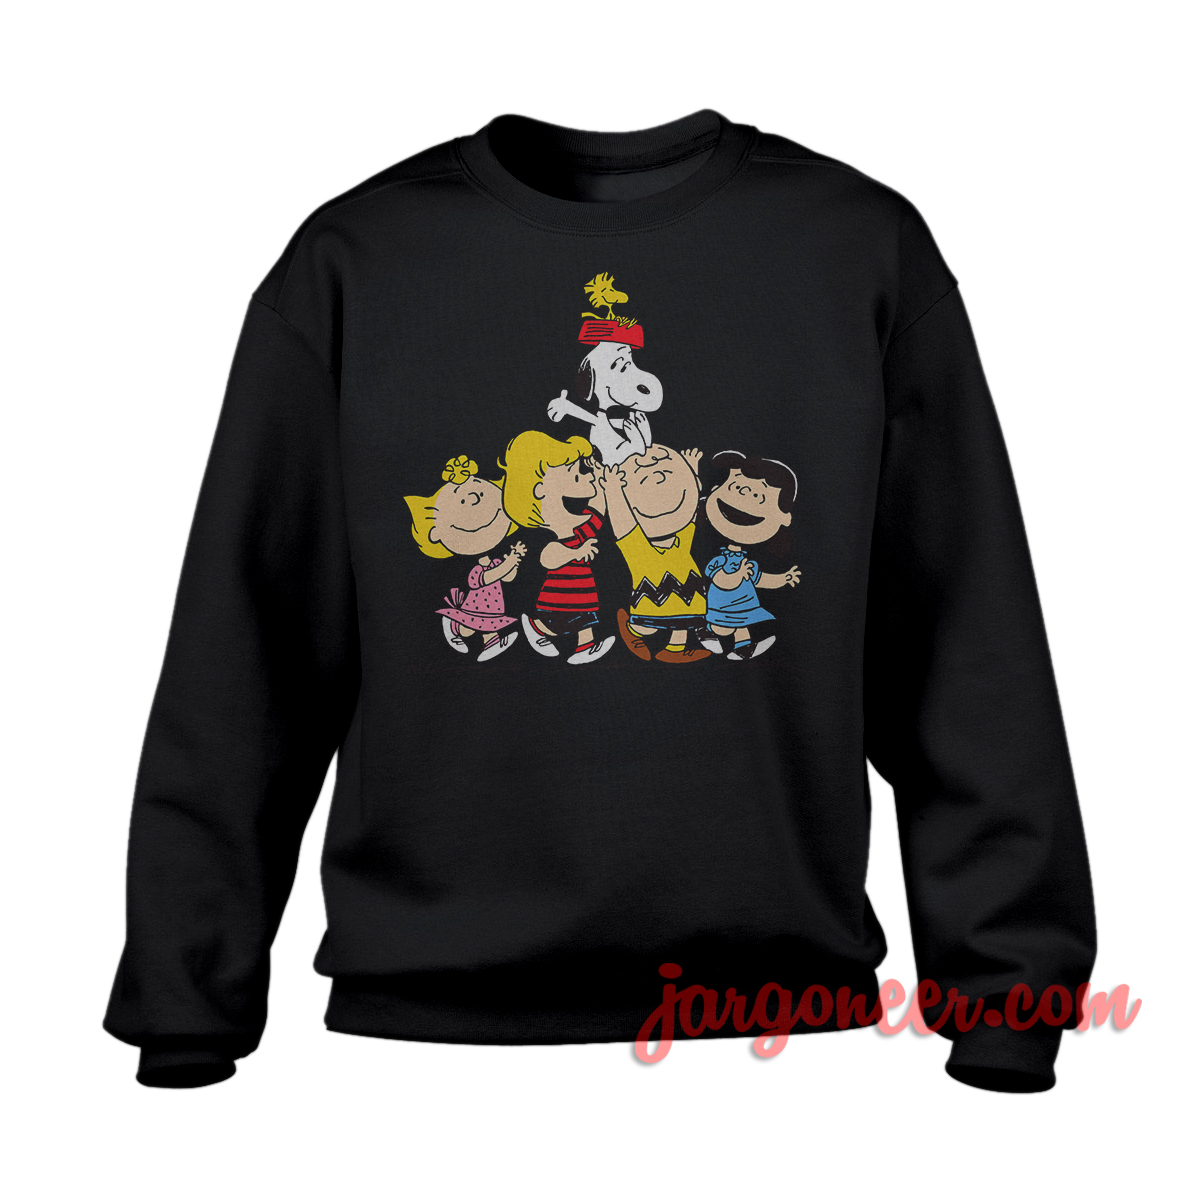 The Hooray Peanuts Black SS - Shop Unique Graphic Cool Shirt Designs